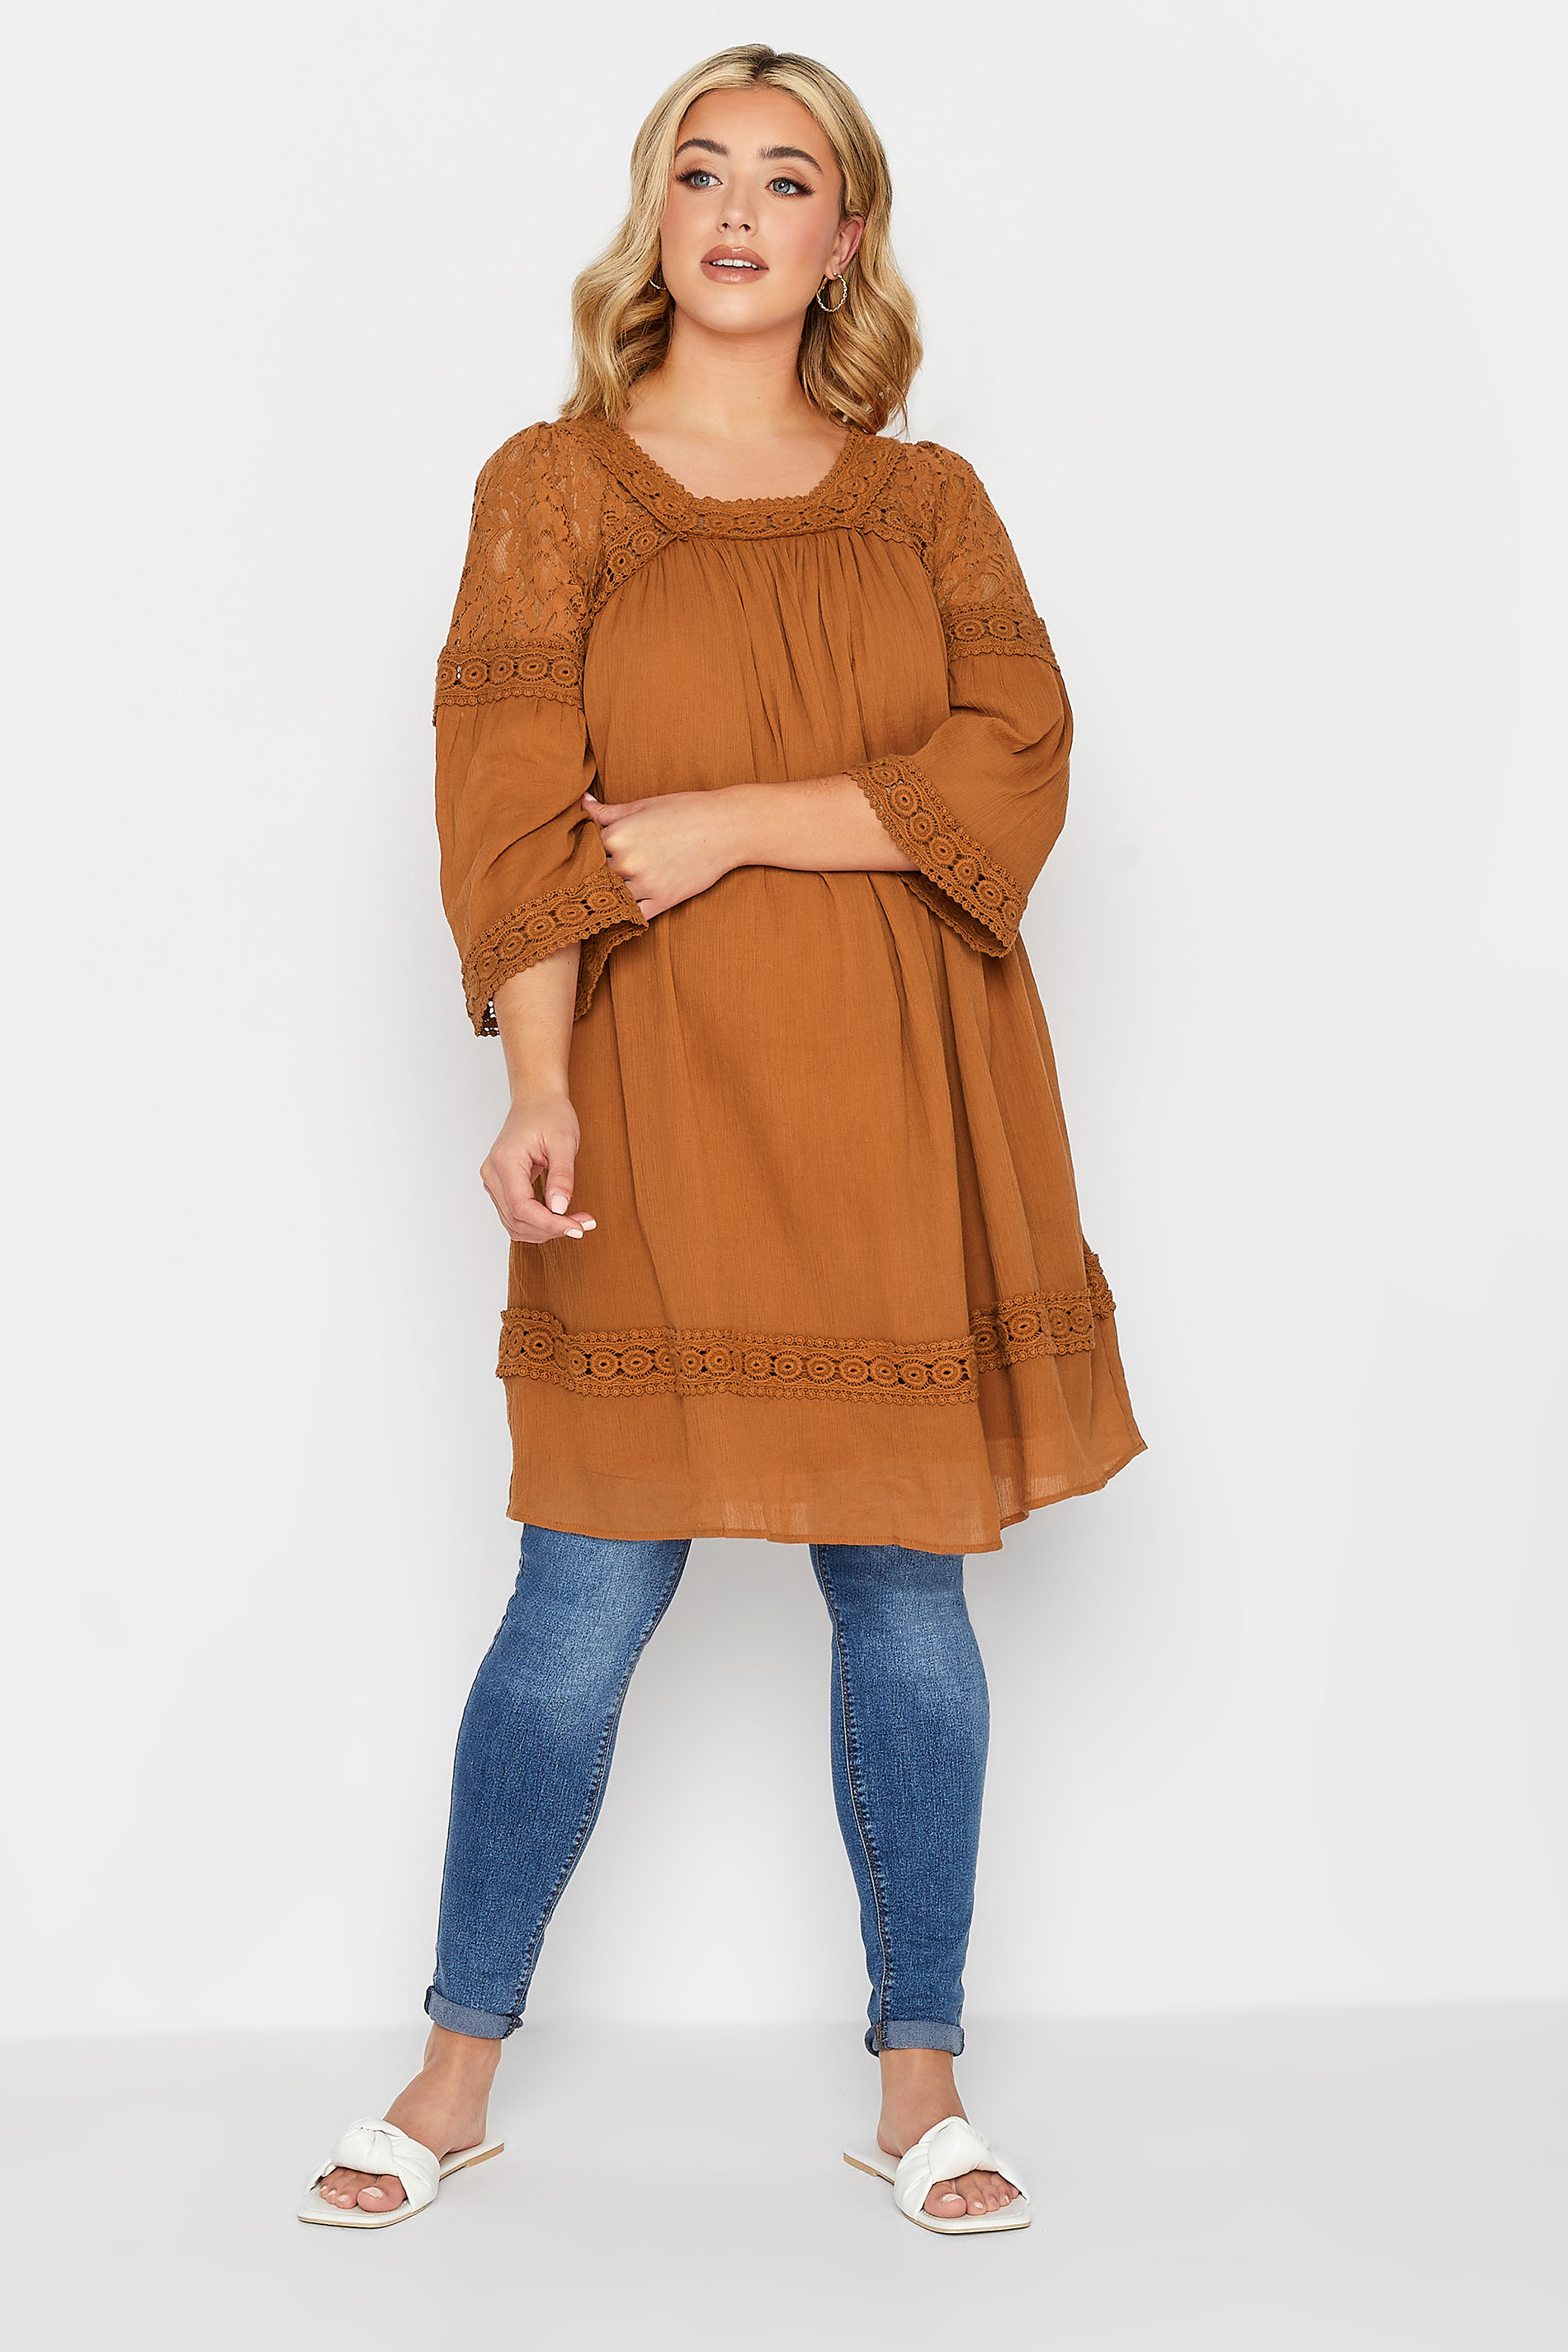 YOURS Curve Plus Size Orange Crochet Lace Tunic Blouse | Yours Clothing  2